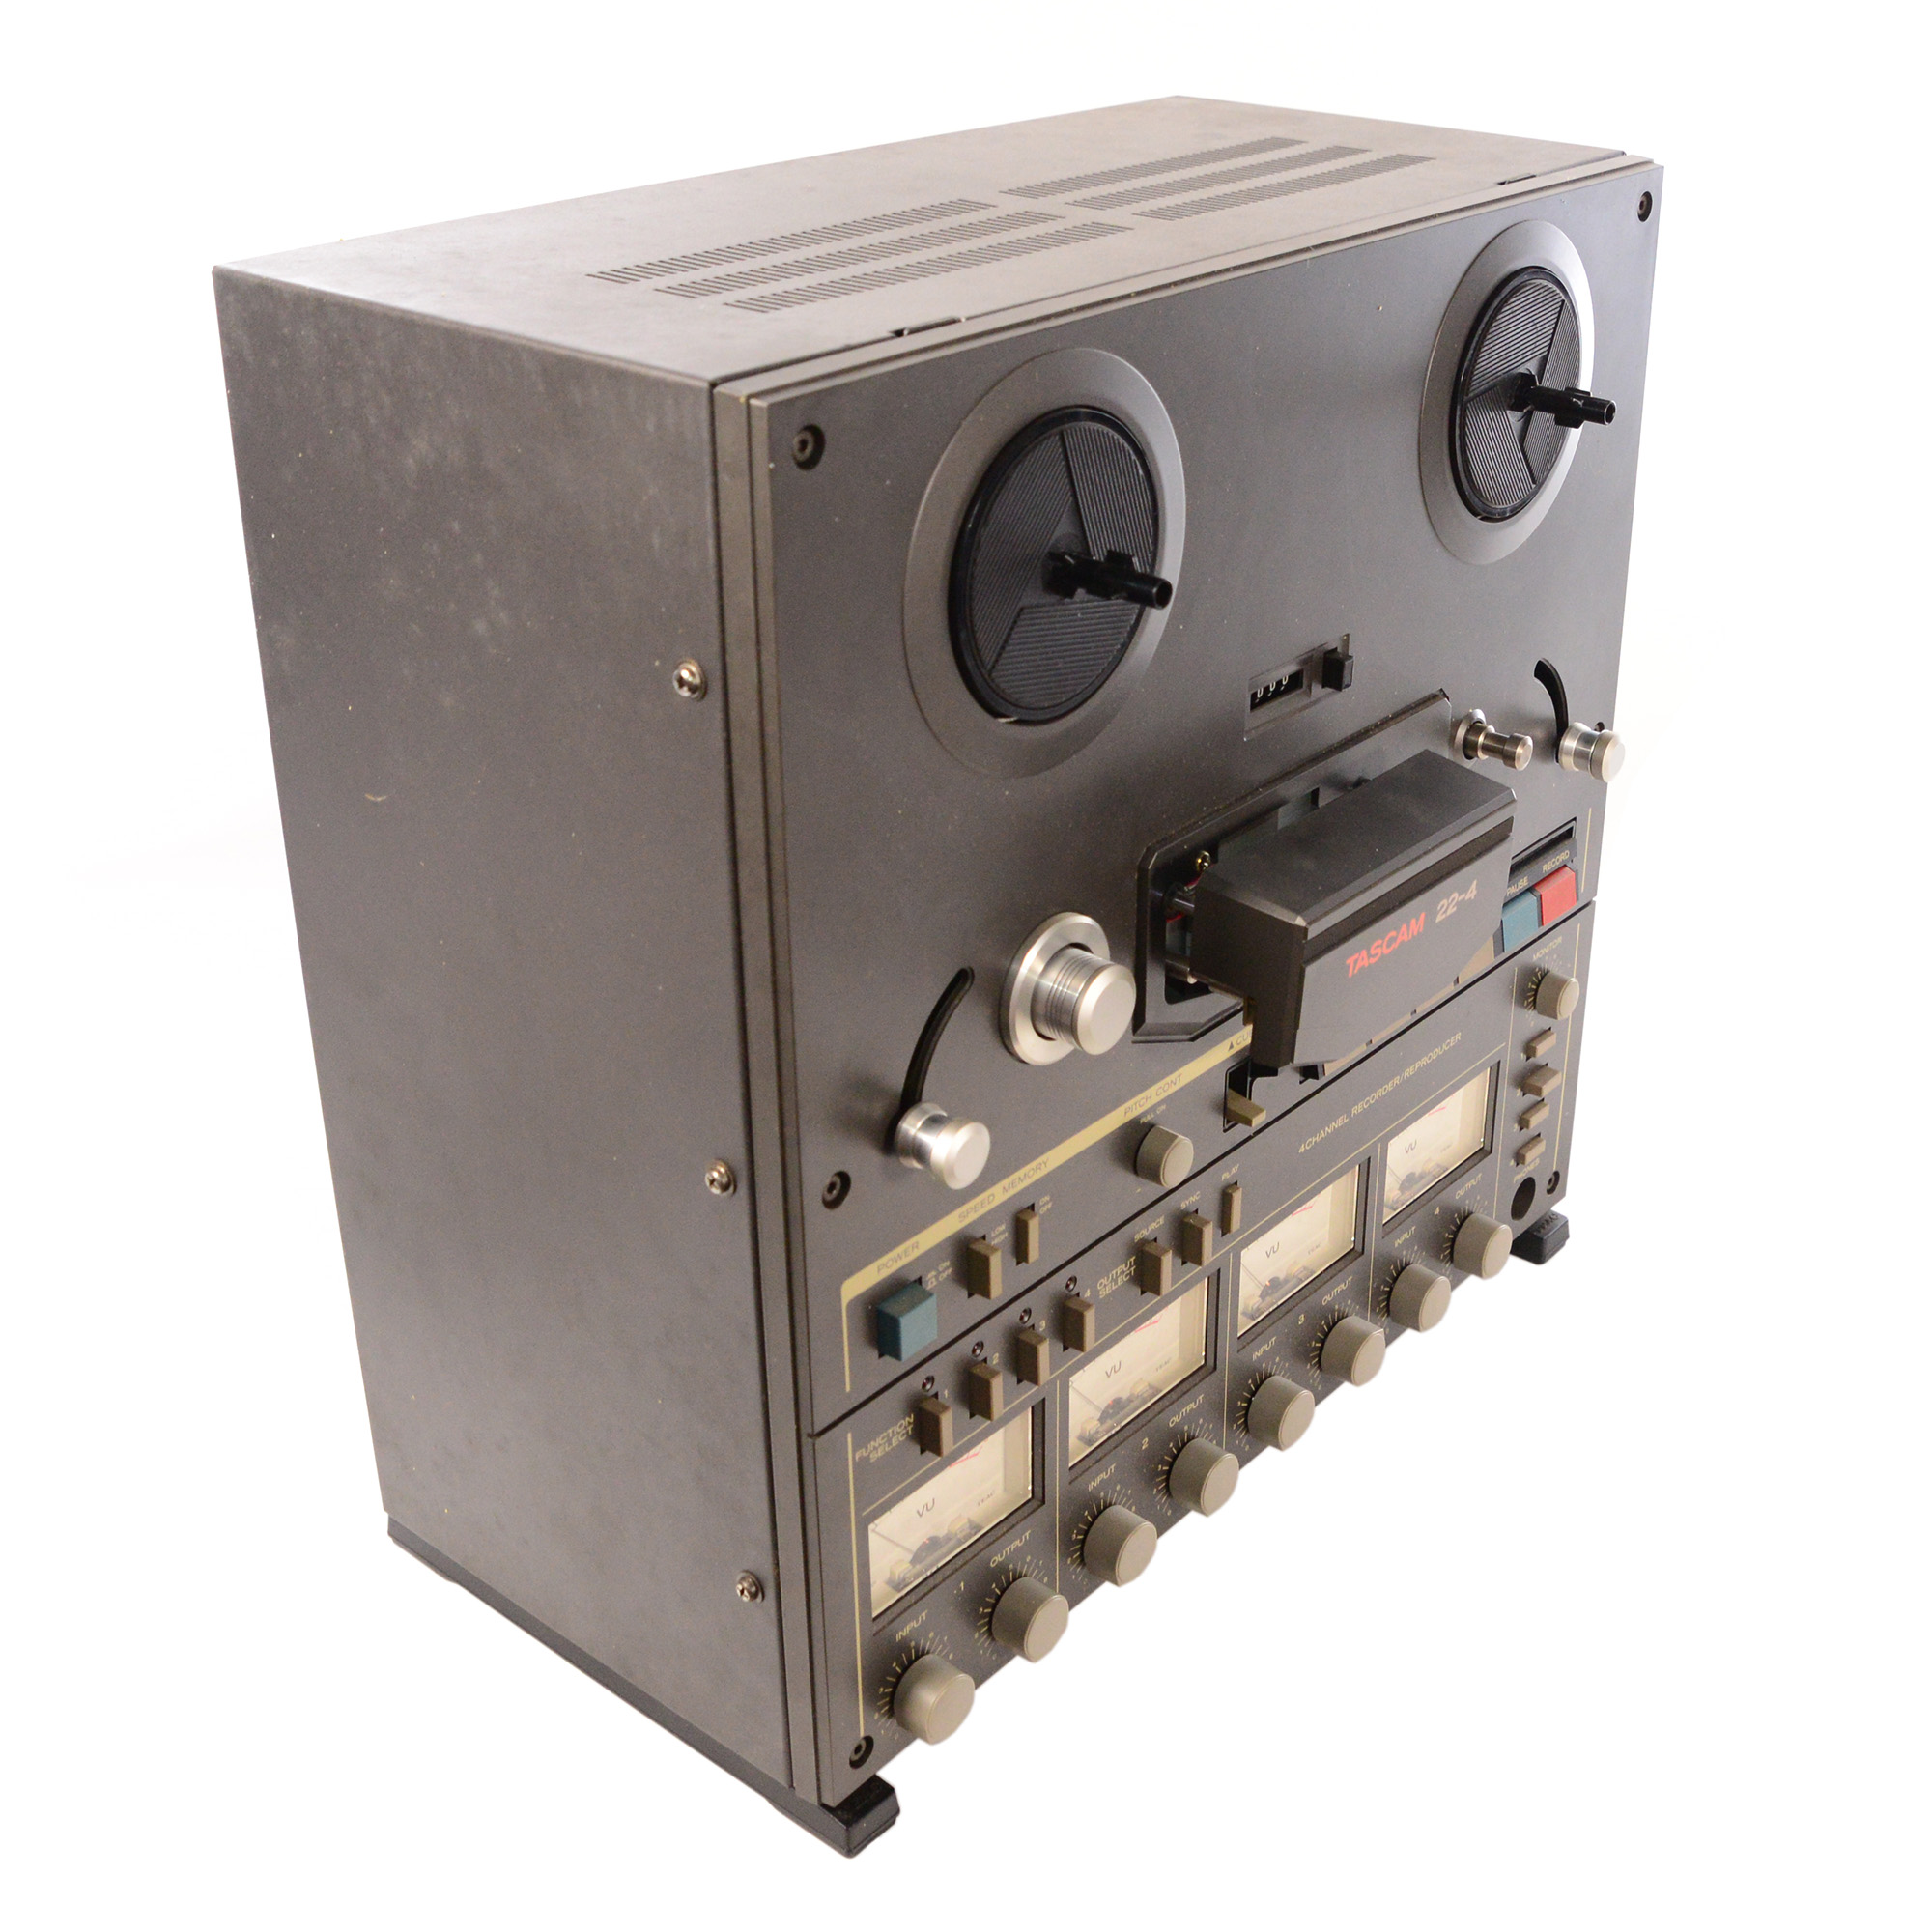 TASCAM 22-4 1/4 4-Track Reel to Reel Tape Recorder